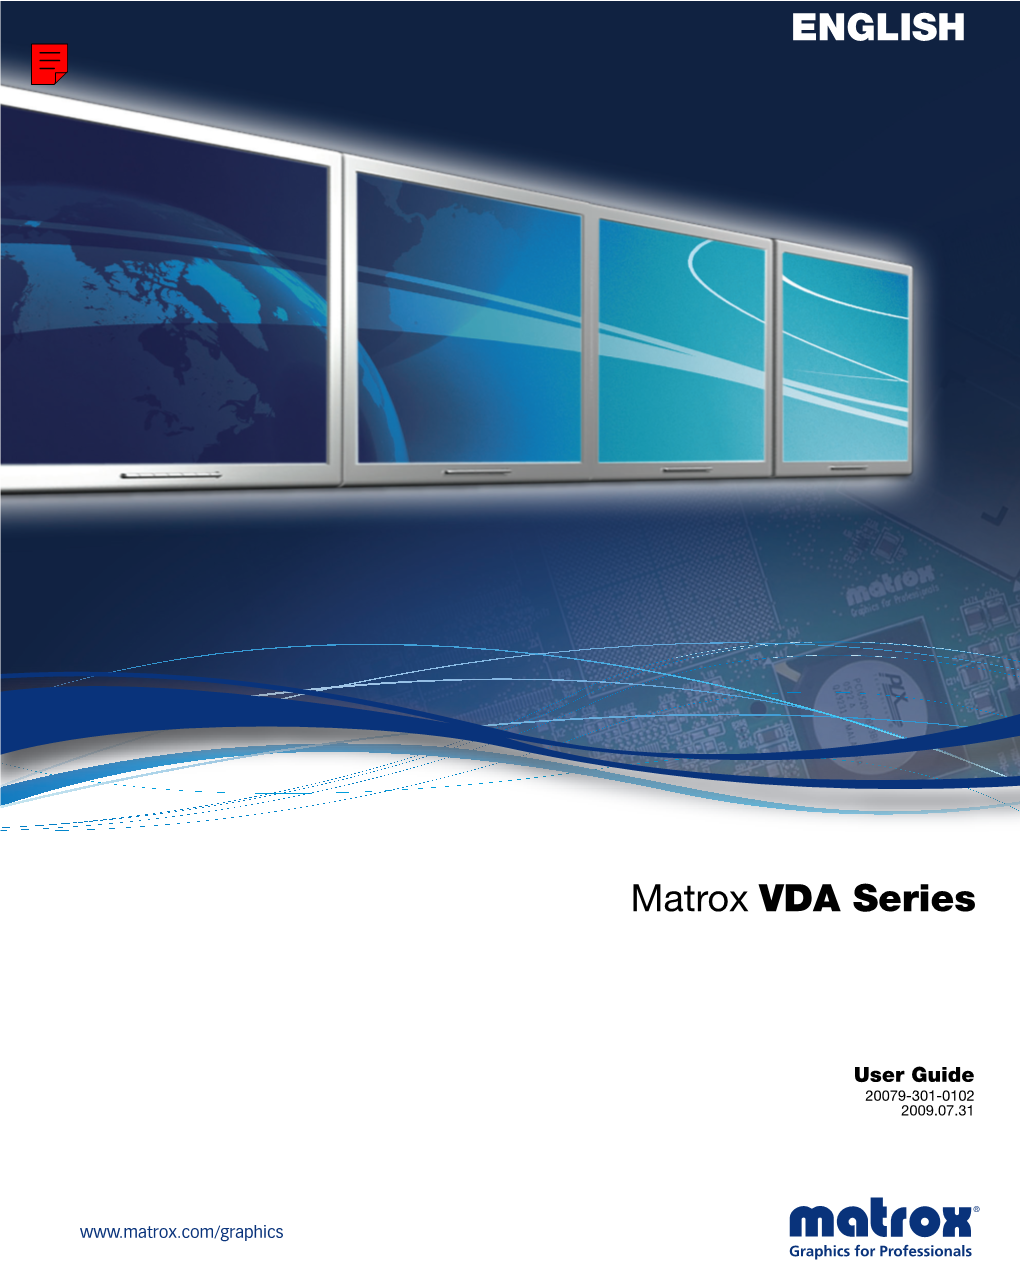 Matrox VDA Series